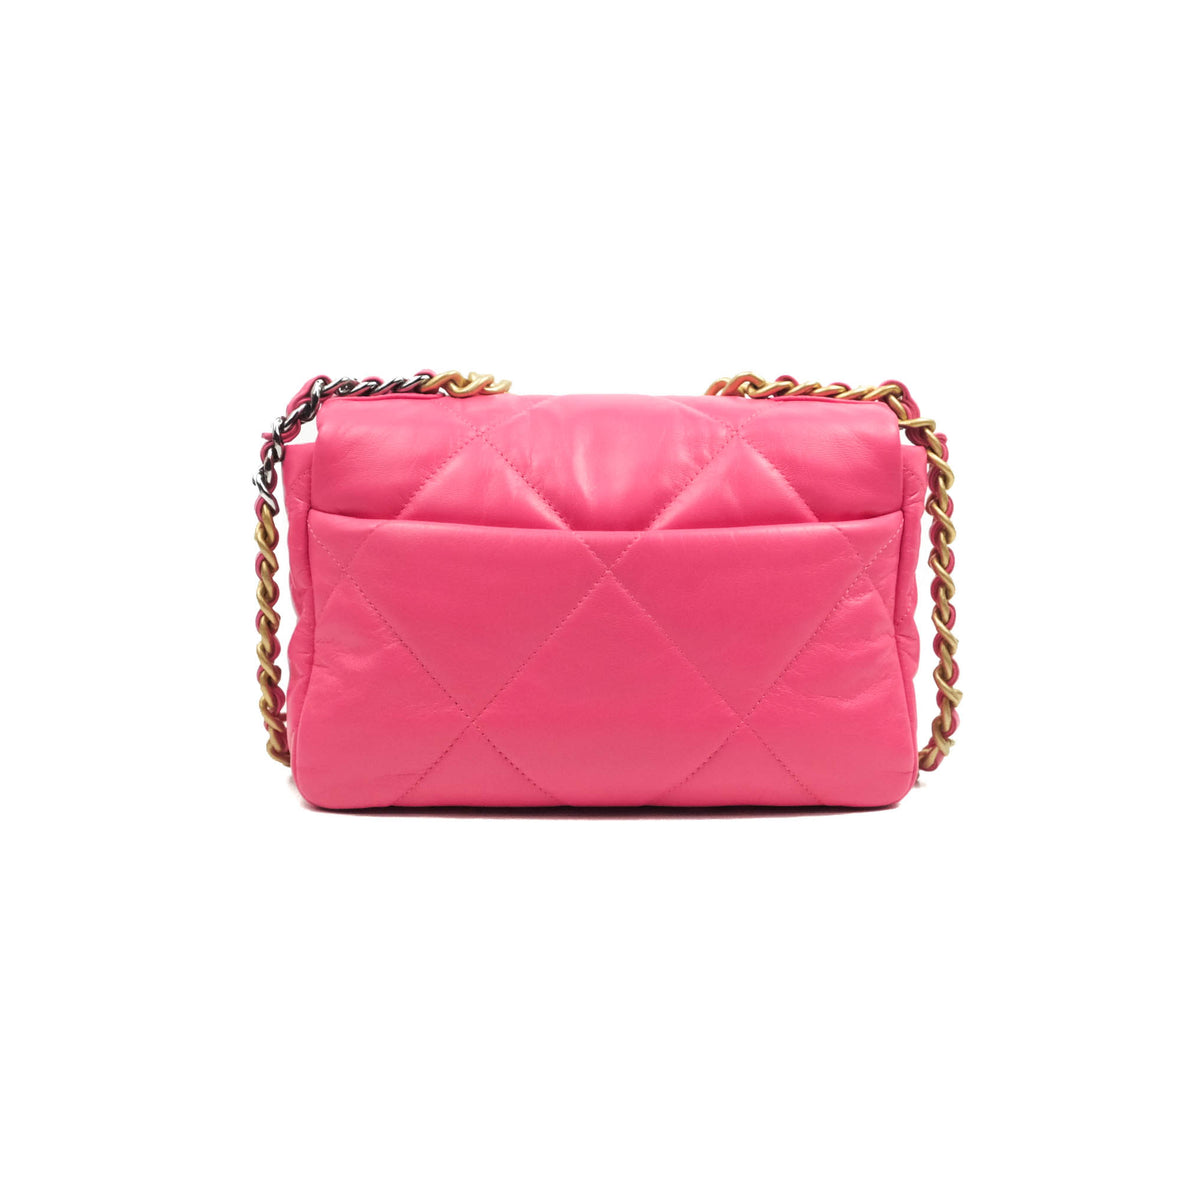 Chanel 19 Small Pink Goatskin – Now You Glow